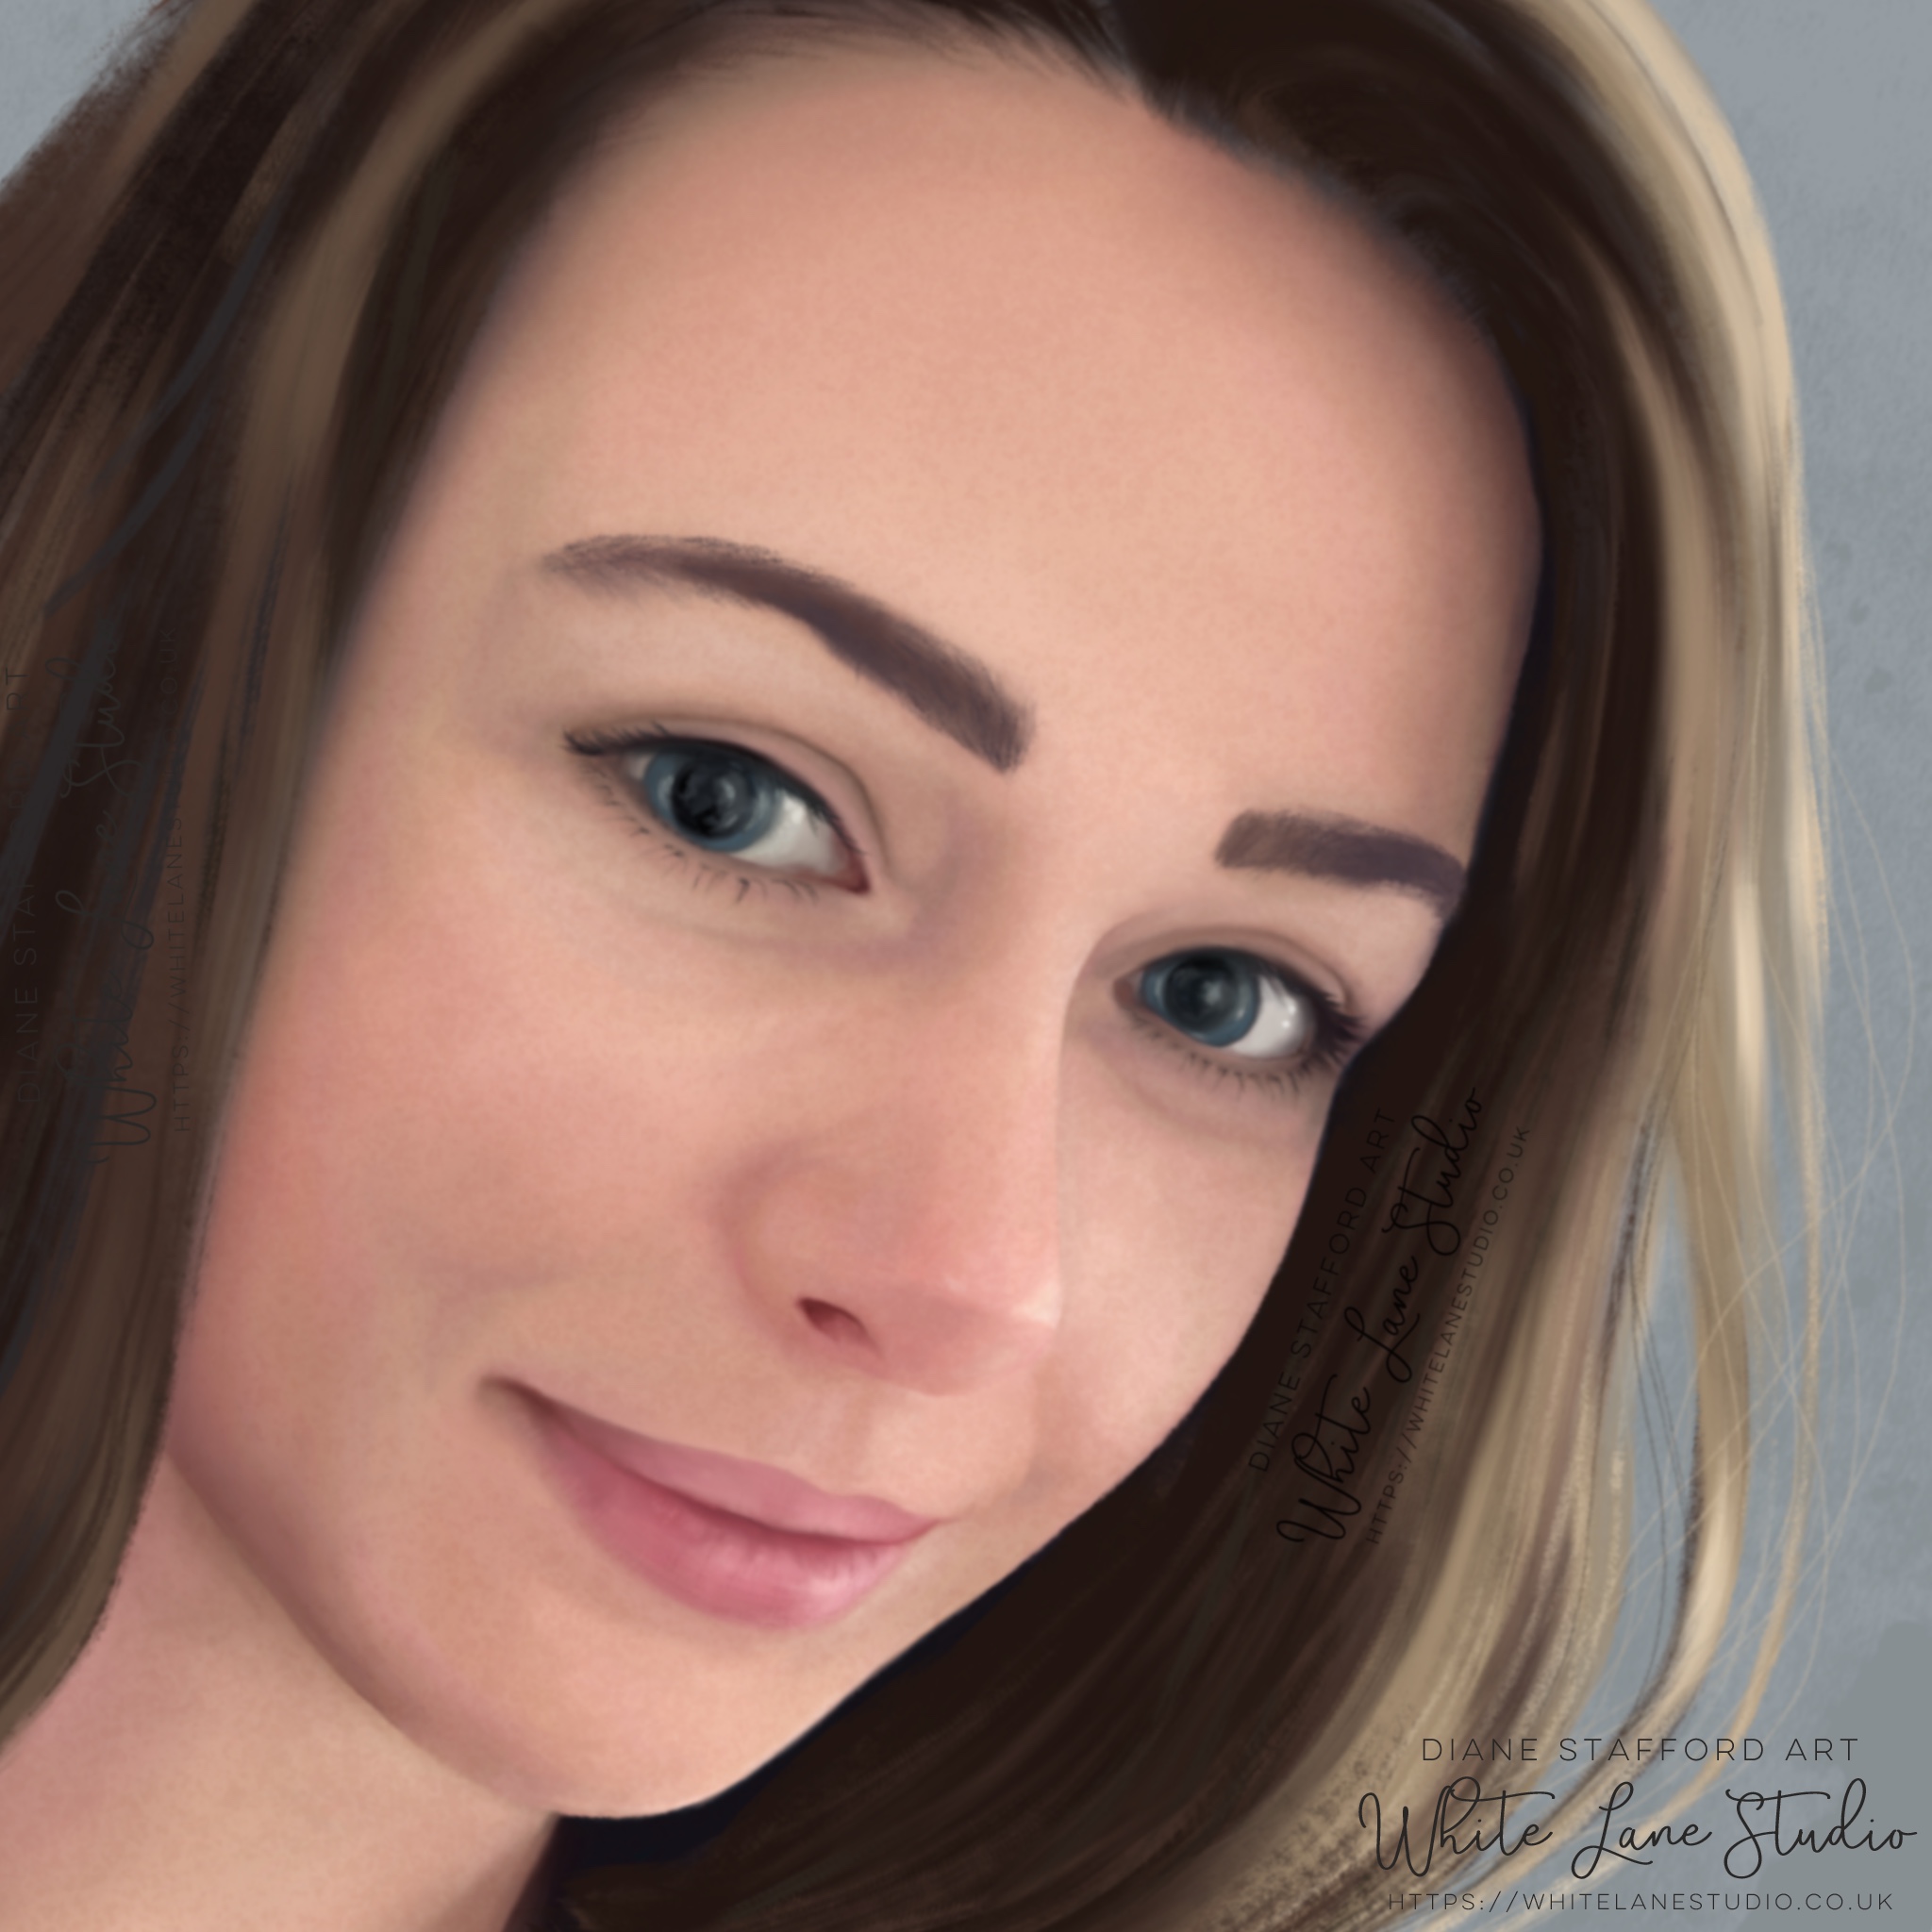 Hand Painted Digital Portrait (CR) by Diane Stafford